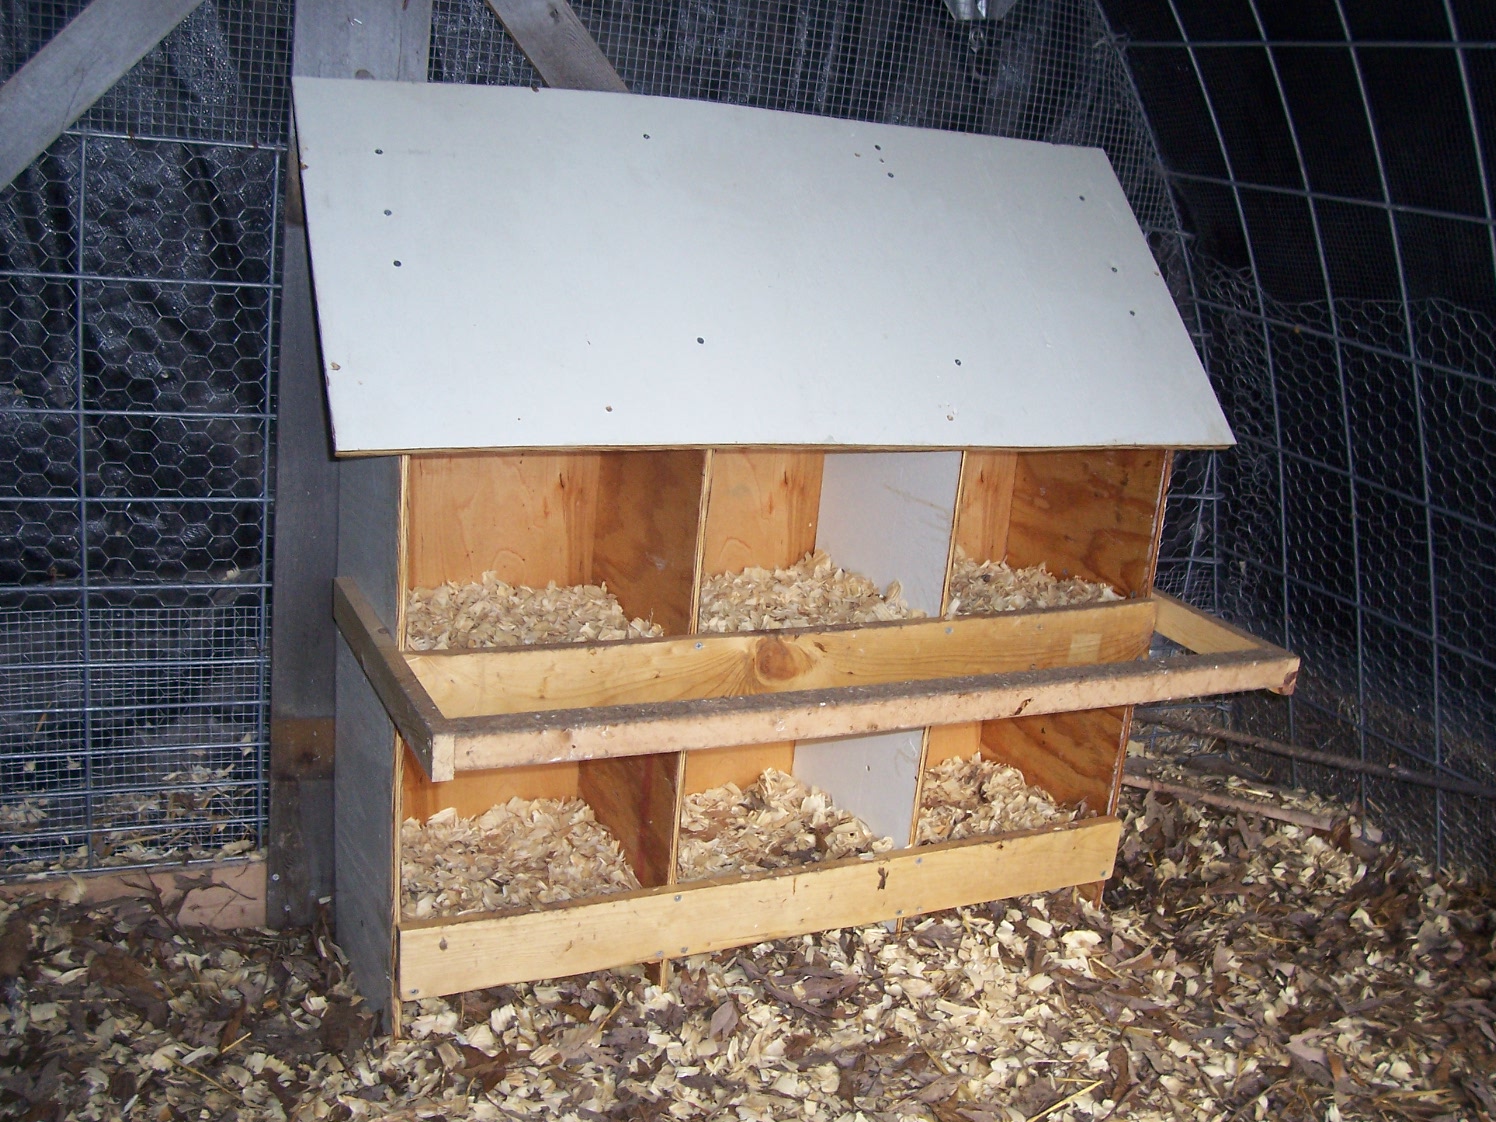 ... Garden Journal: A Low cost, easy to build, chicken nest box design